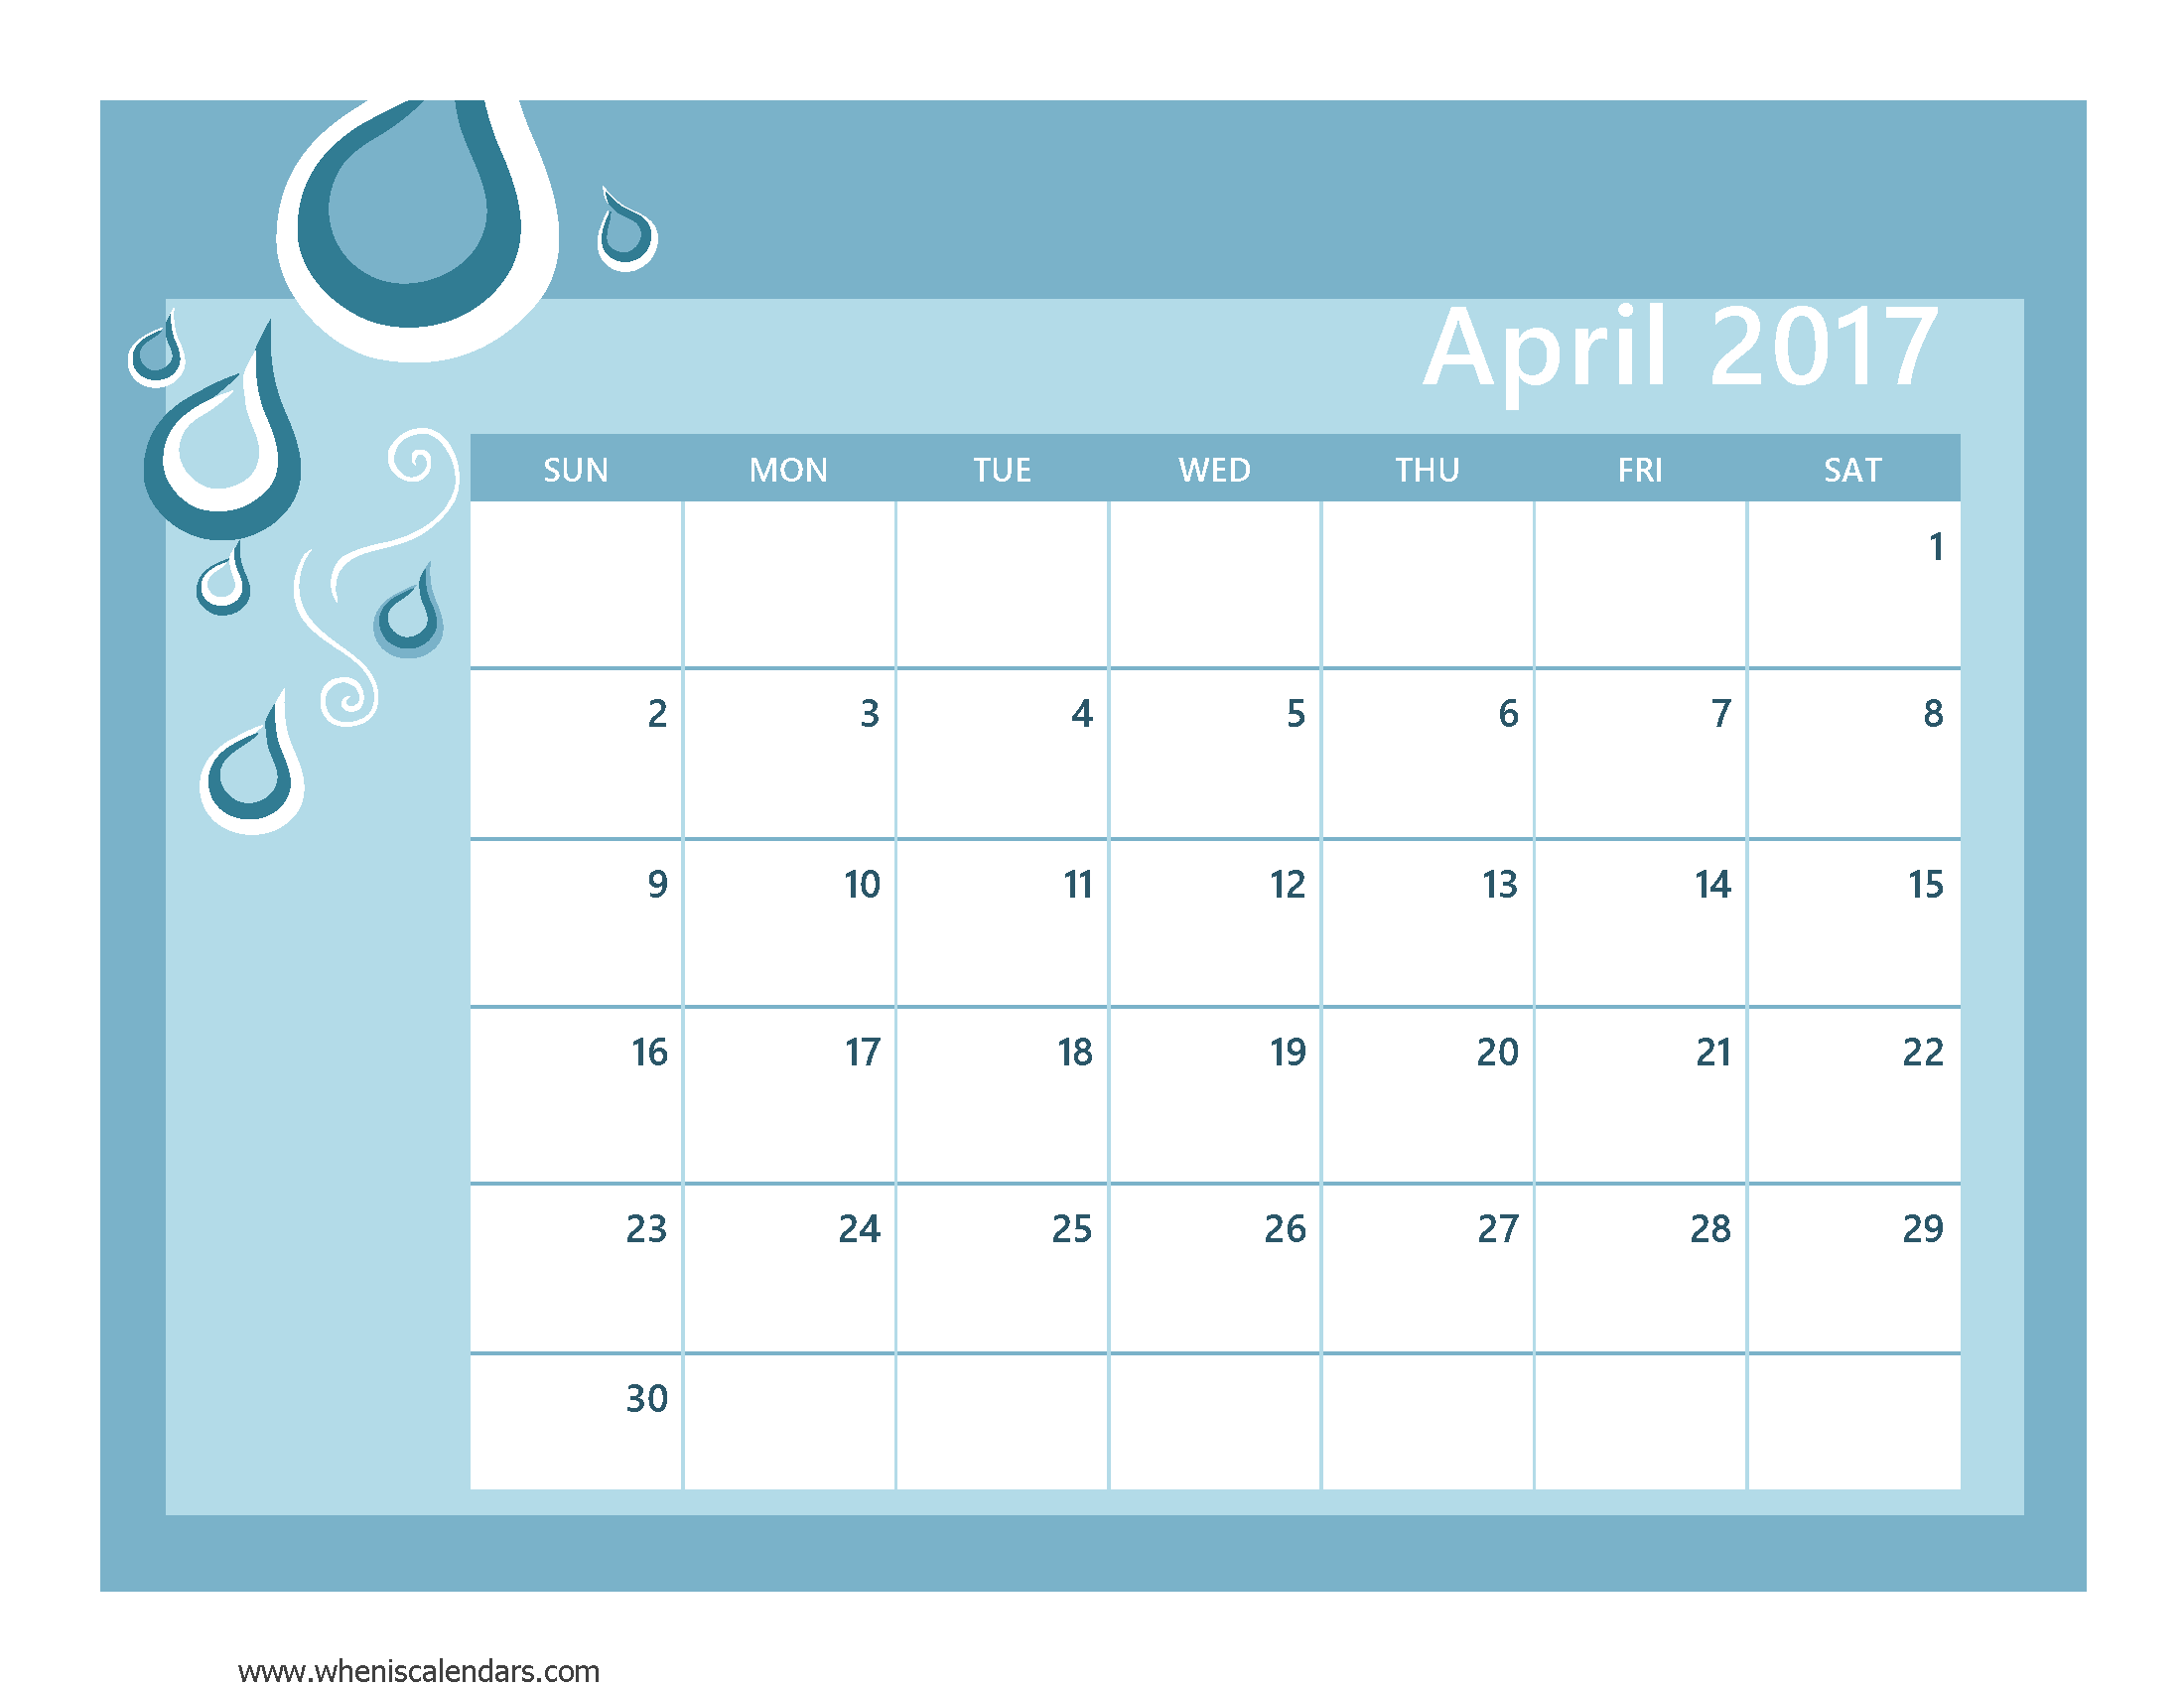 April 2017 Calendar Printable With Holidays | weekly calendar template